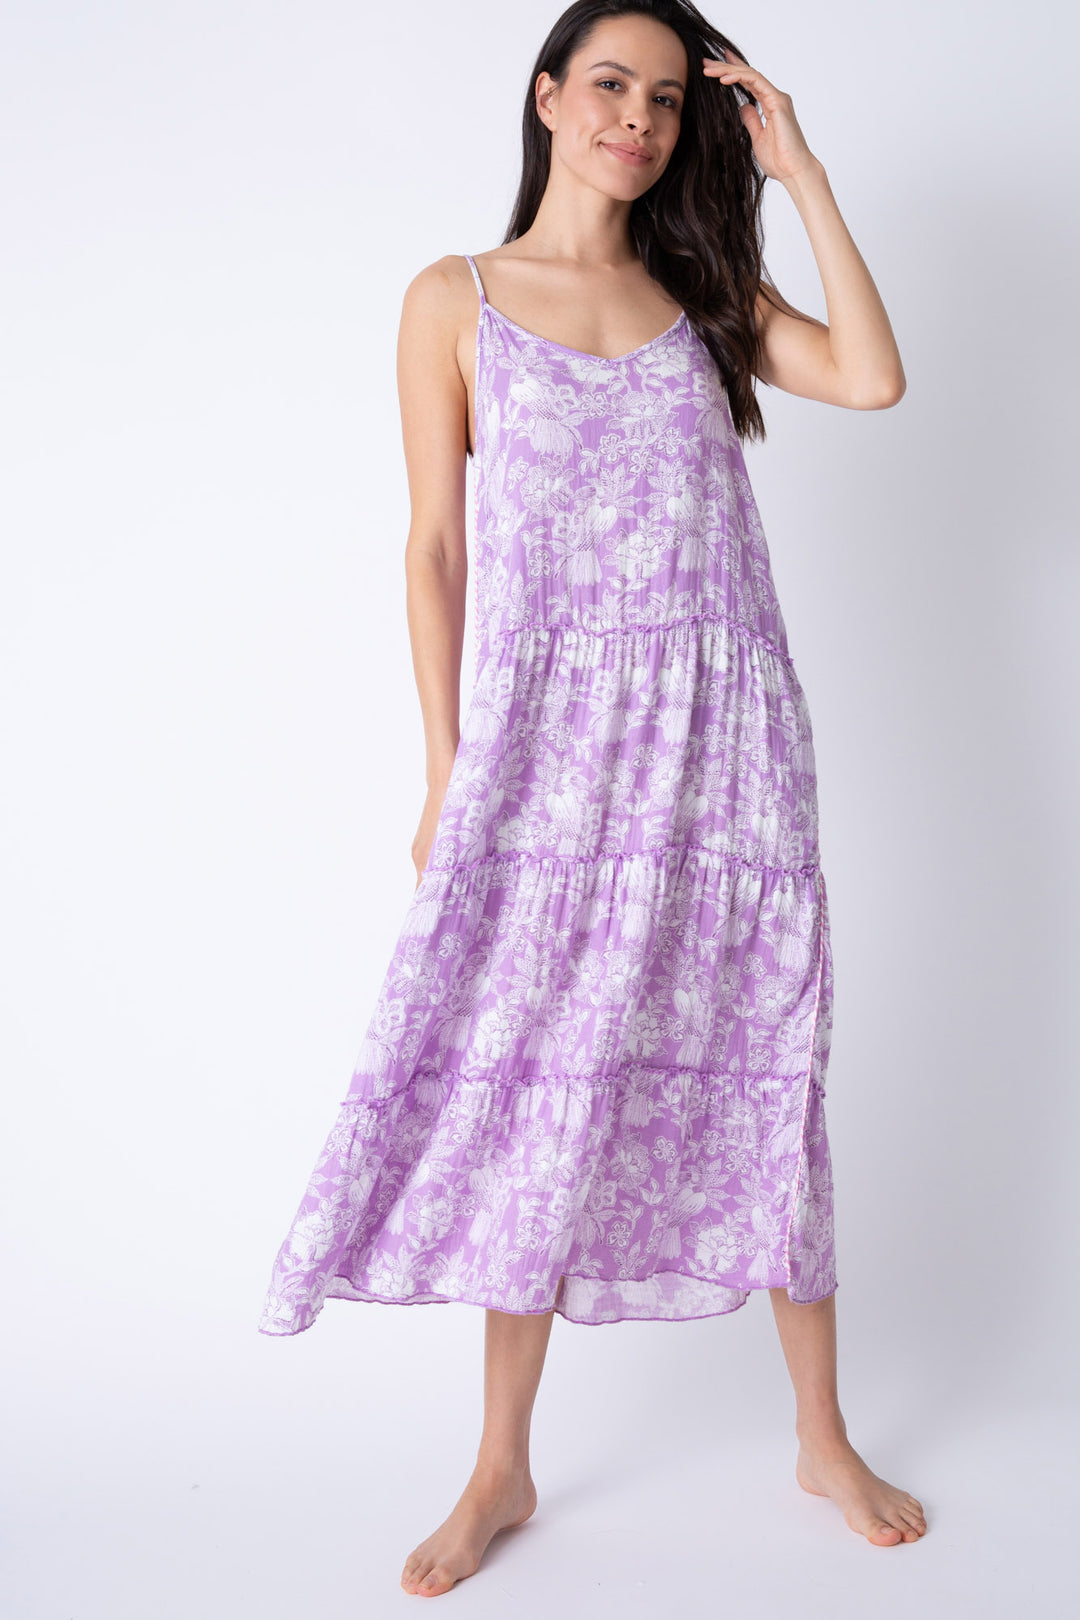 Cotton gauze women's dress in pale purple print. Straps adjust.